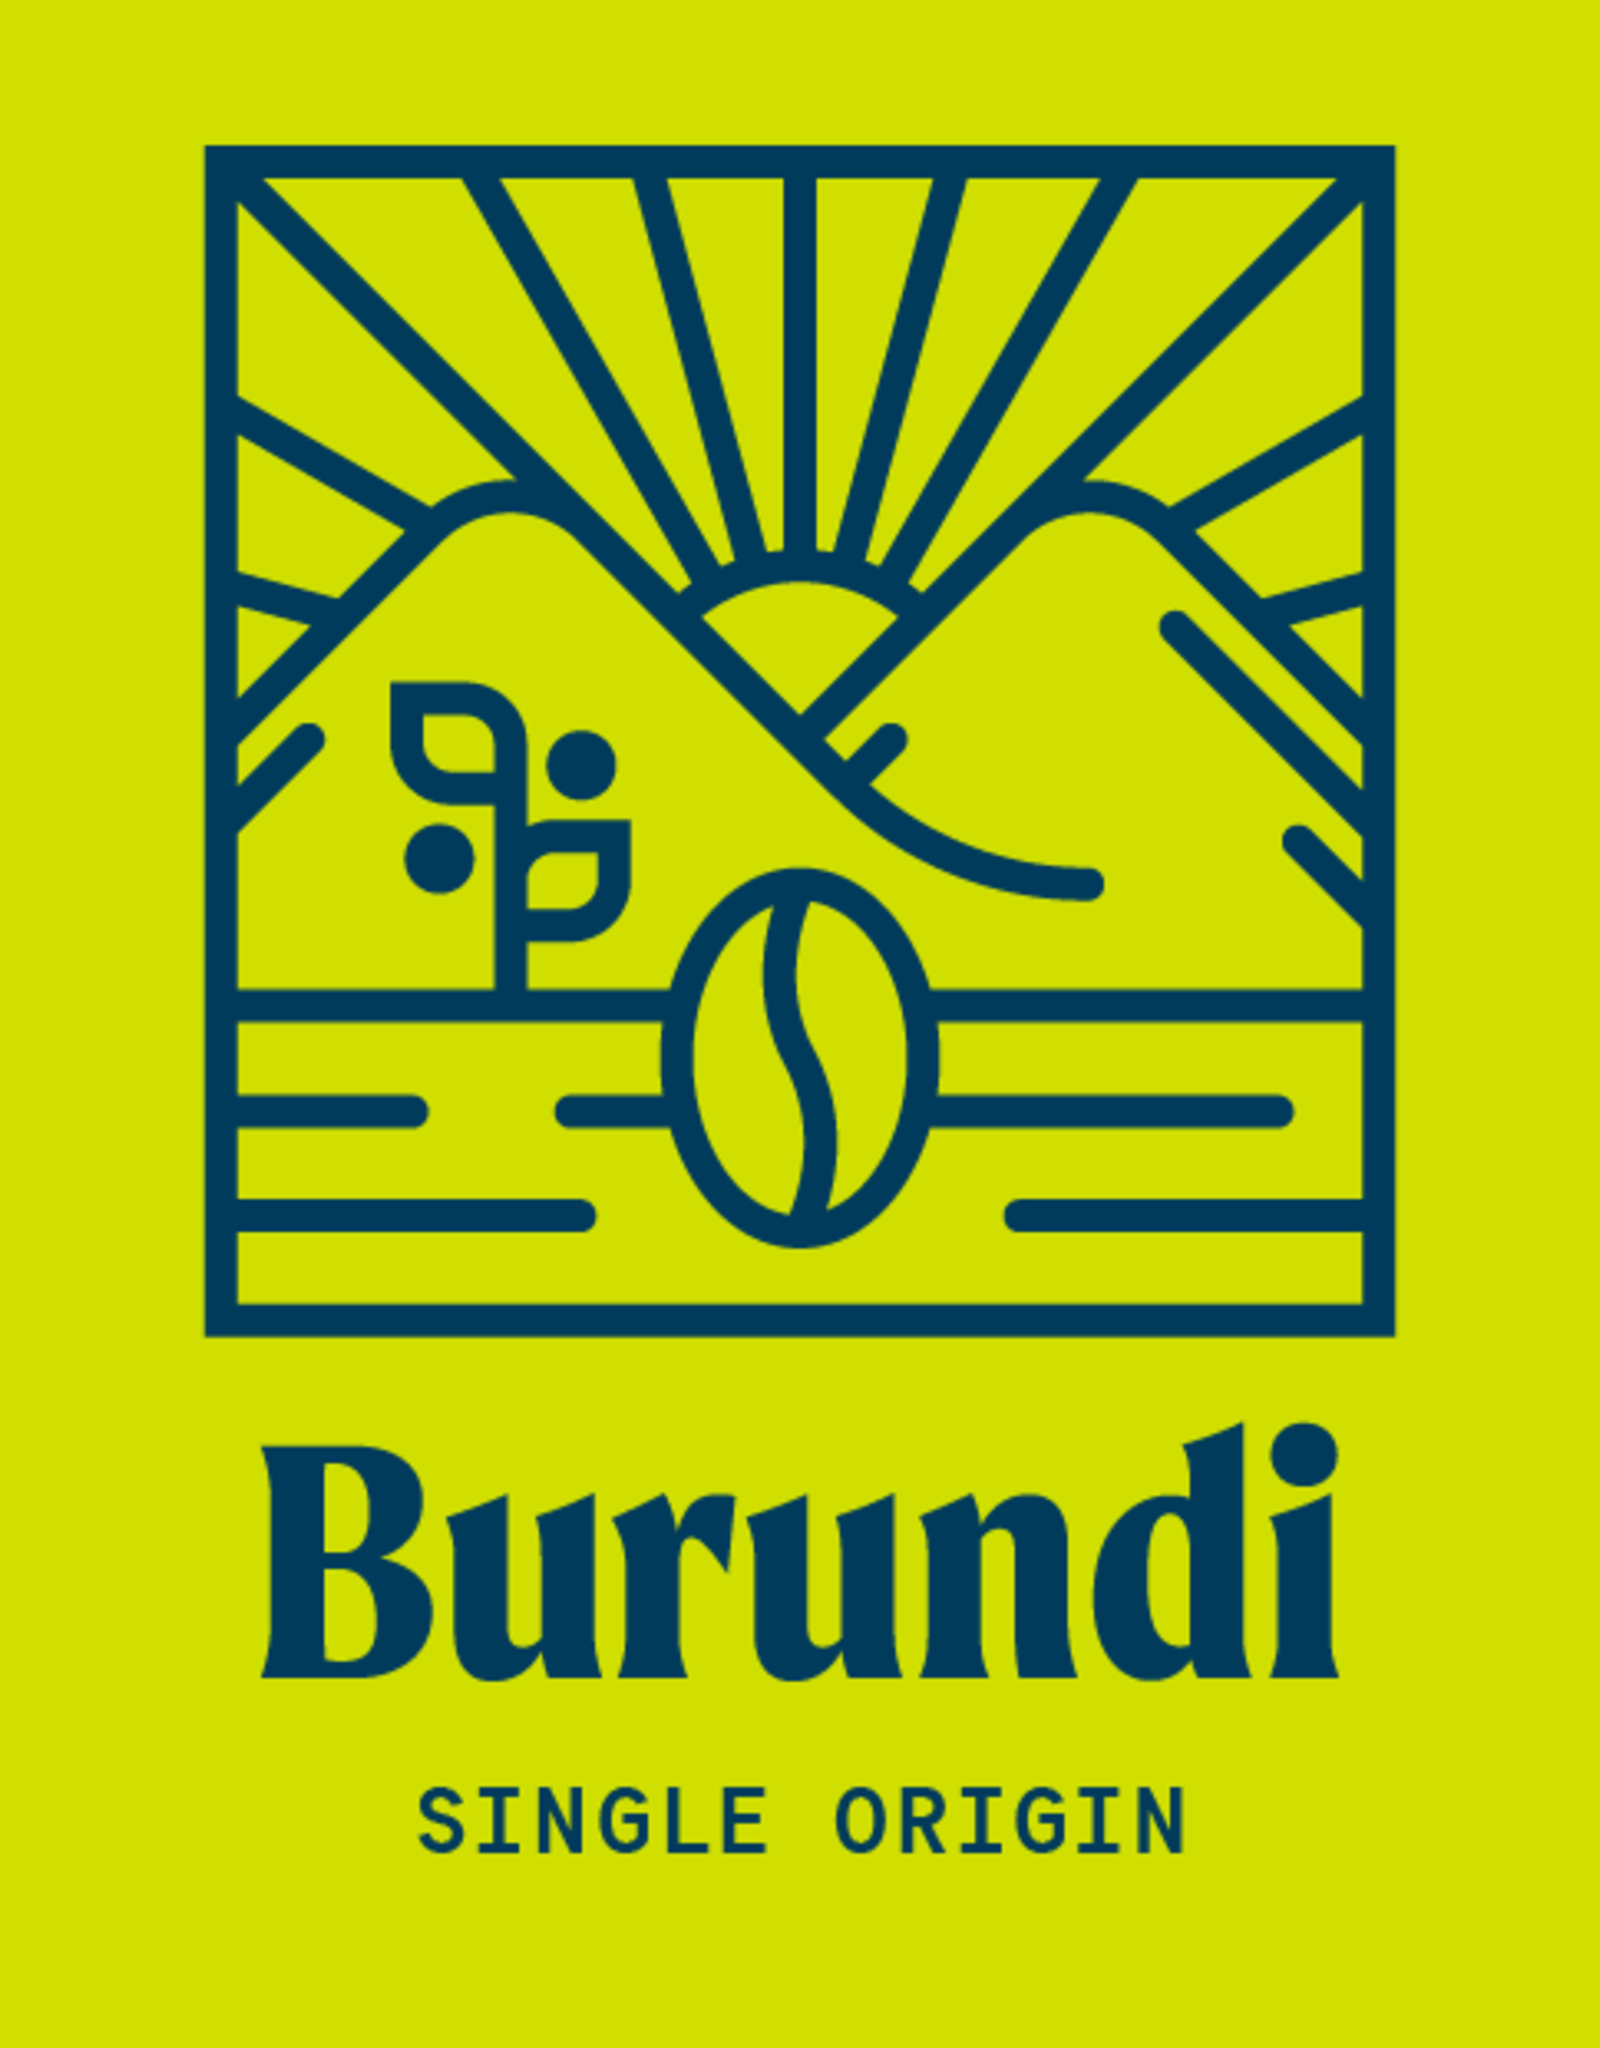 Galloping Goose Burundi Coffee